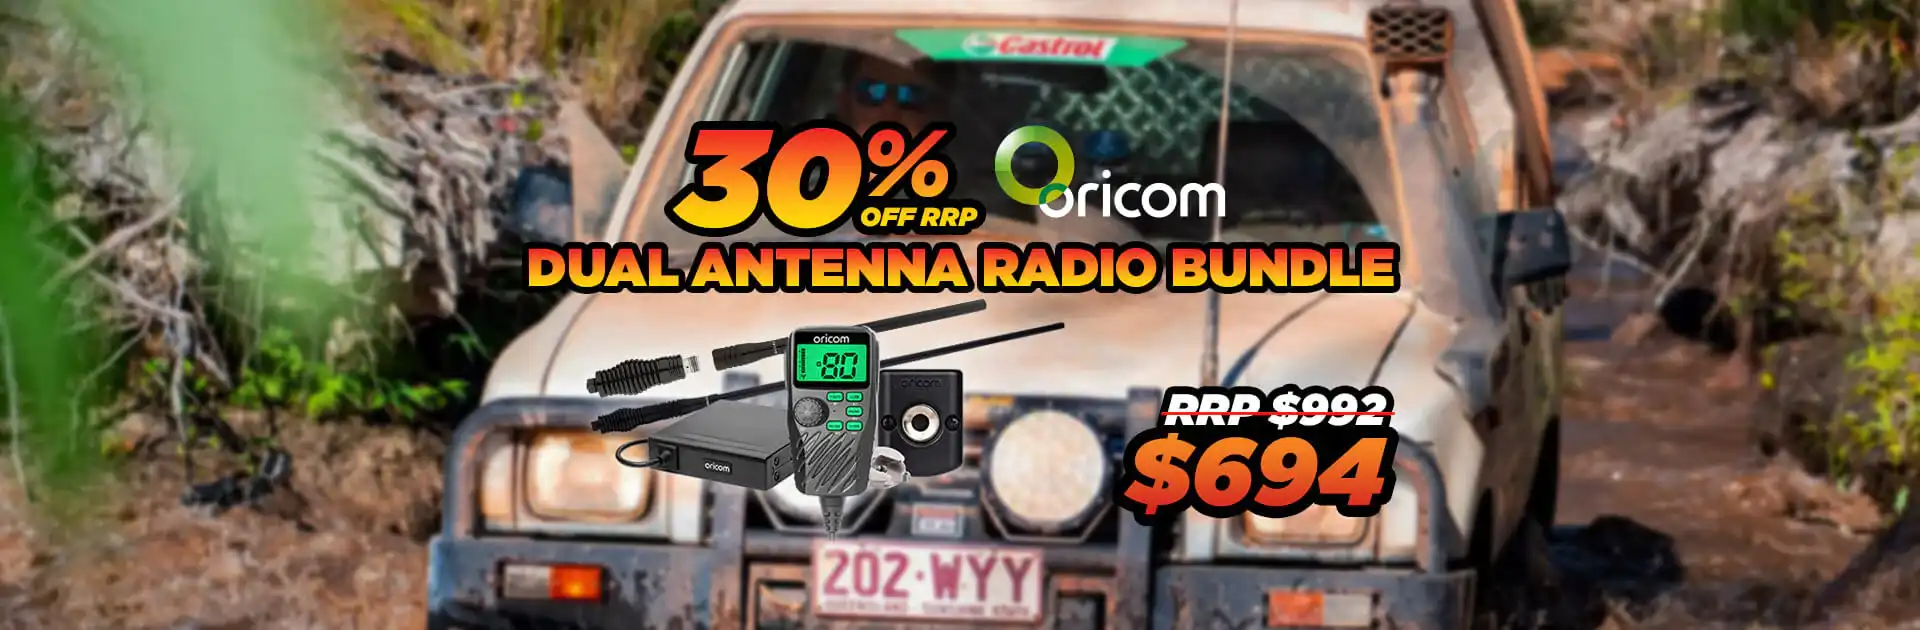 30% OFF RRP Oricom Dual Antenna Radio bundle now $694 at 4WD 24/7